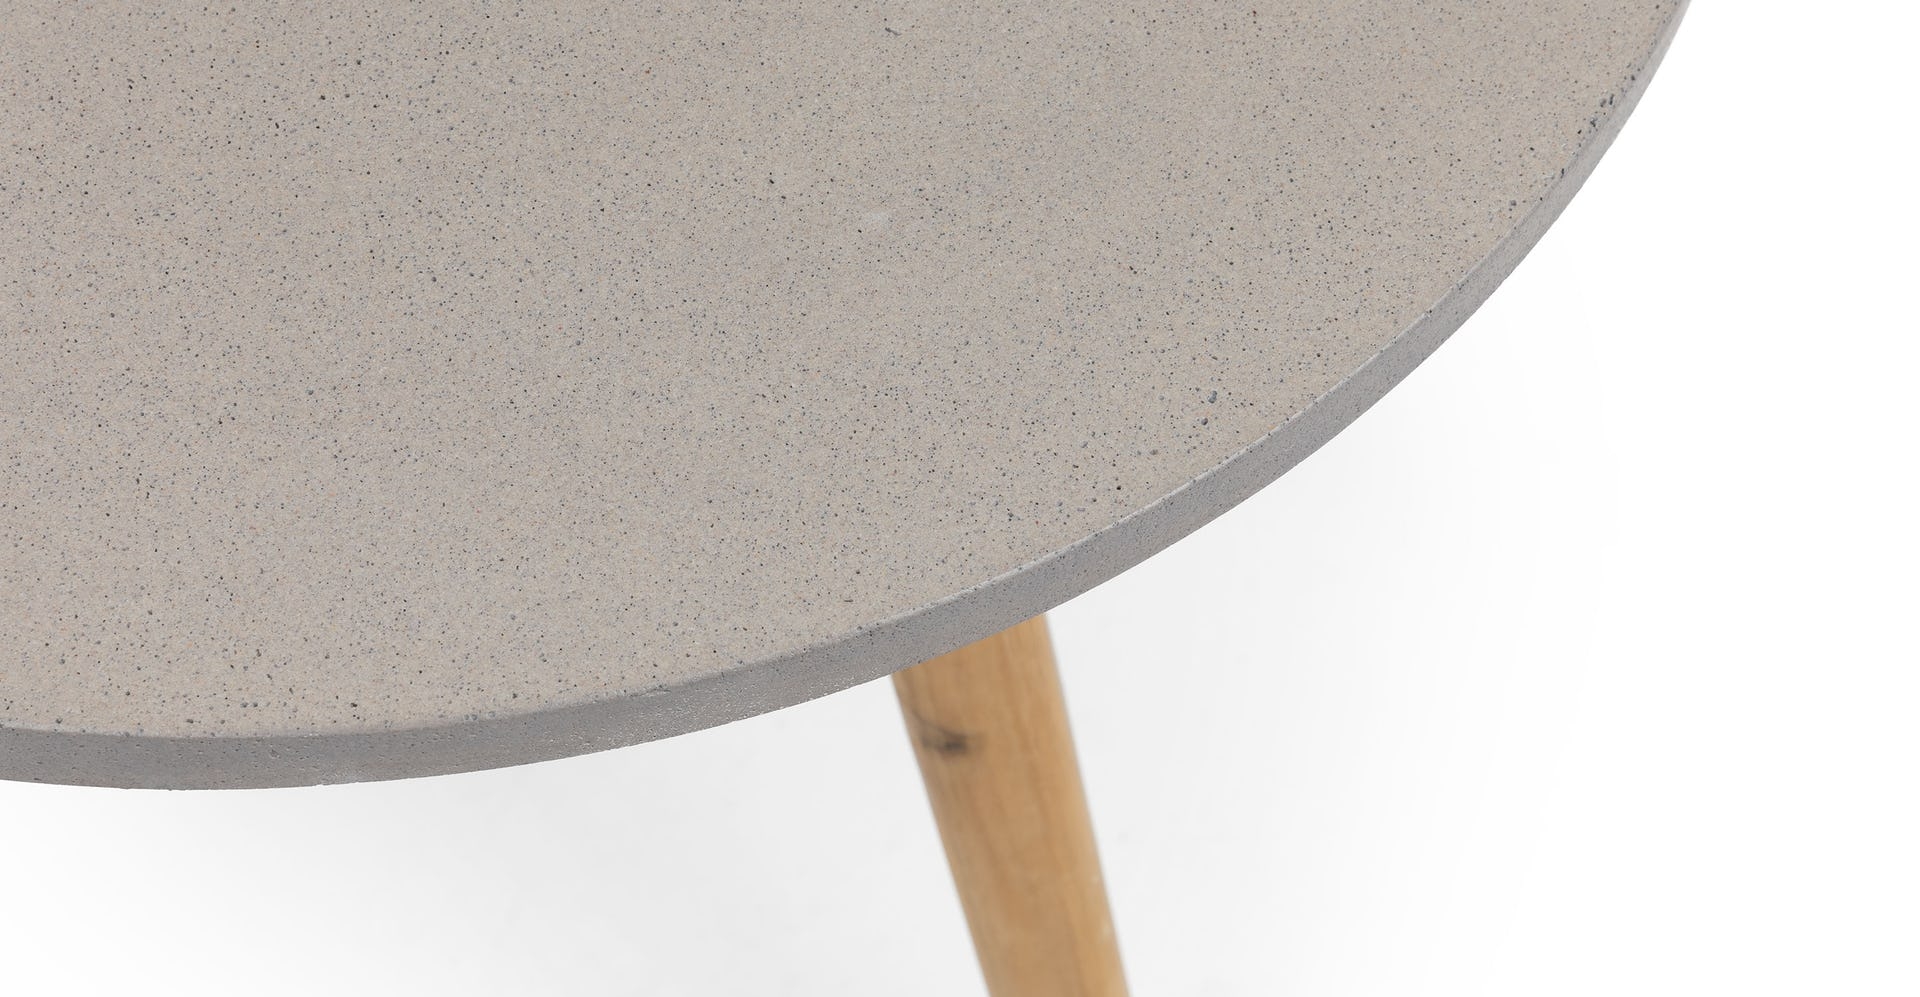 Atra Concrete Round Cafe Table - Image 1